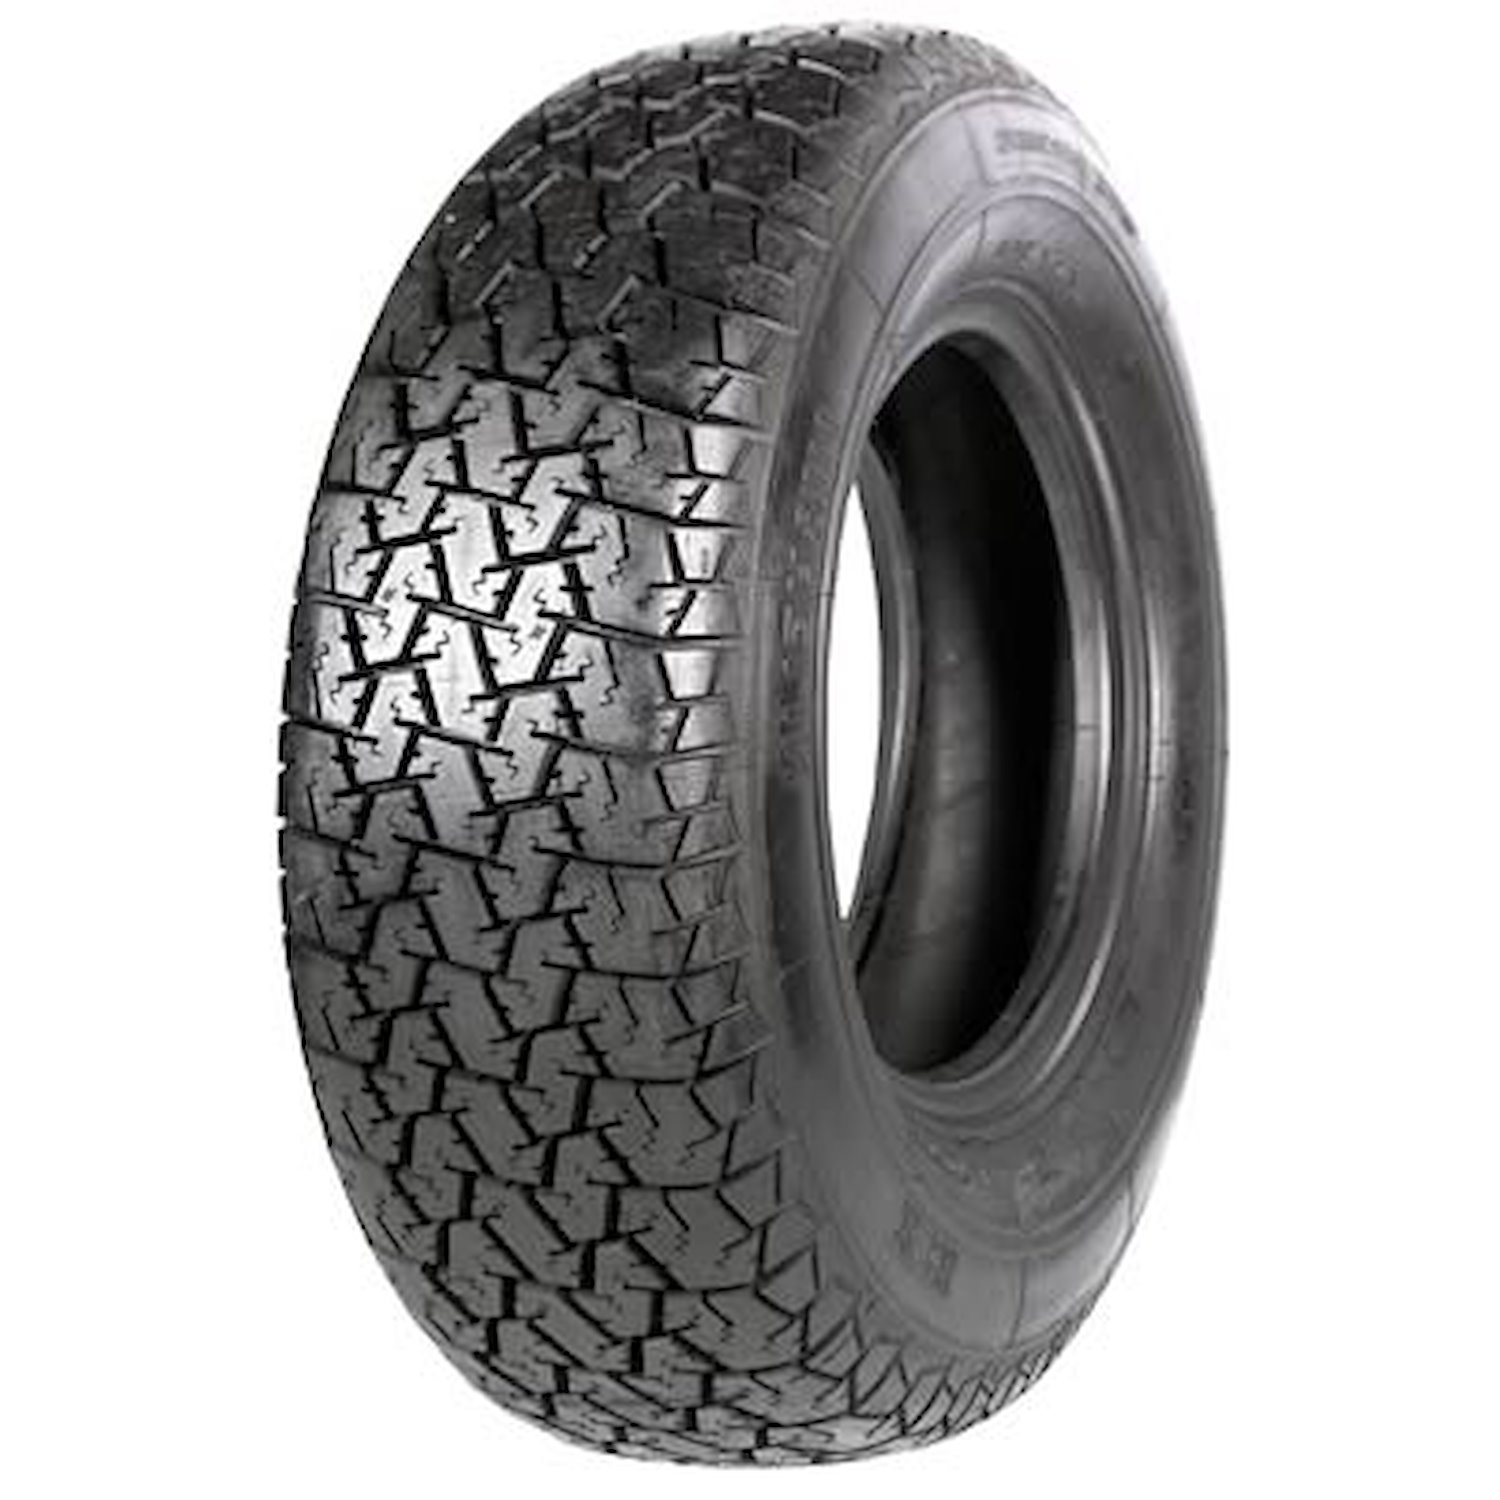 63100 Tire, Michelin XDX-B, 185/70VR13 86V